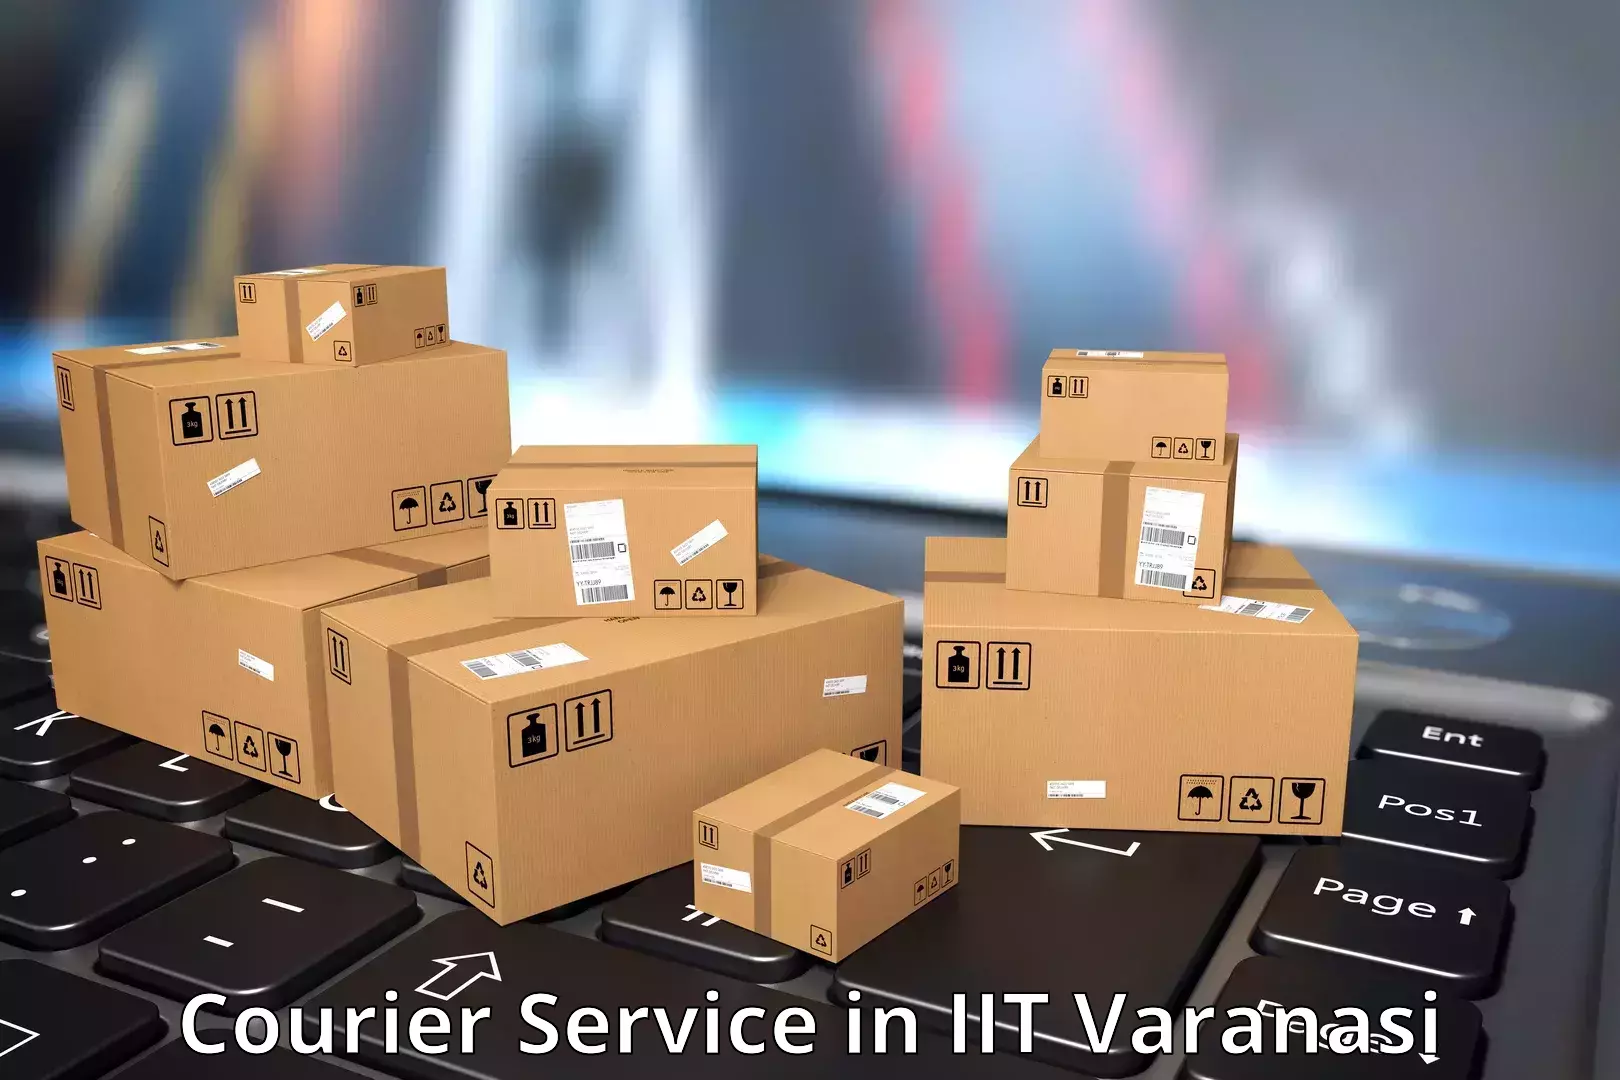 Secure shipping methods in IIT Varanasi